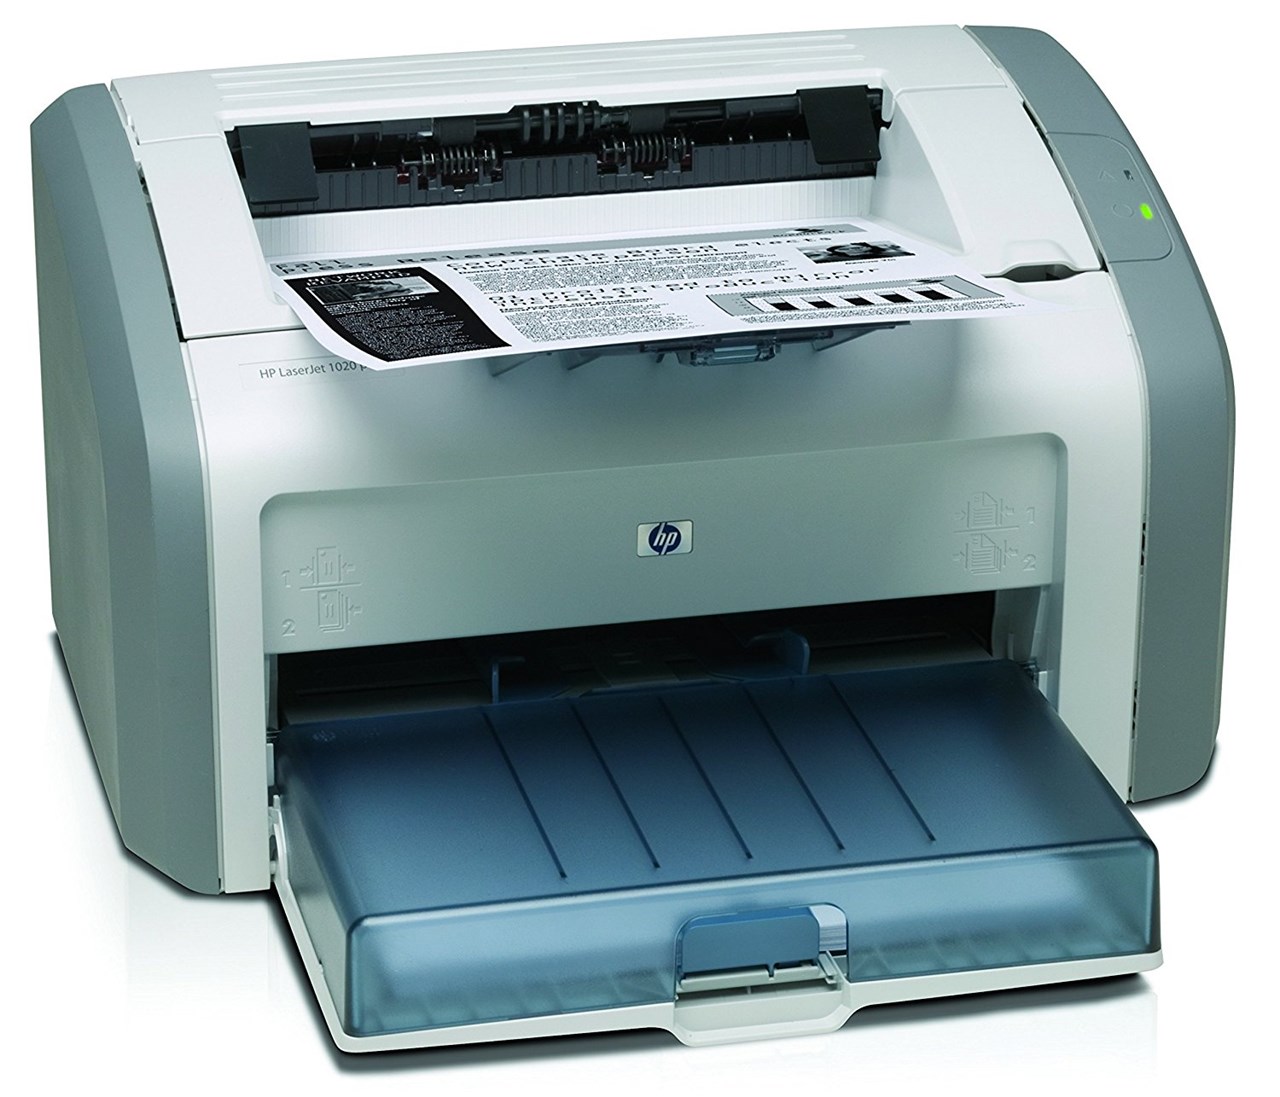 Buy HP Laser Jet 1020 Plus Printer Online Offers at Sathya